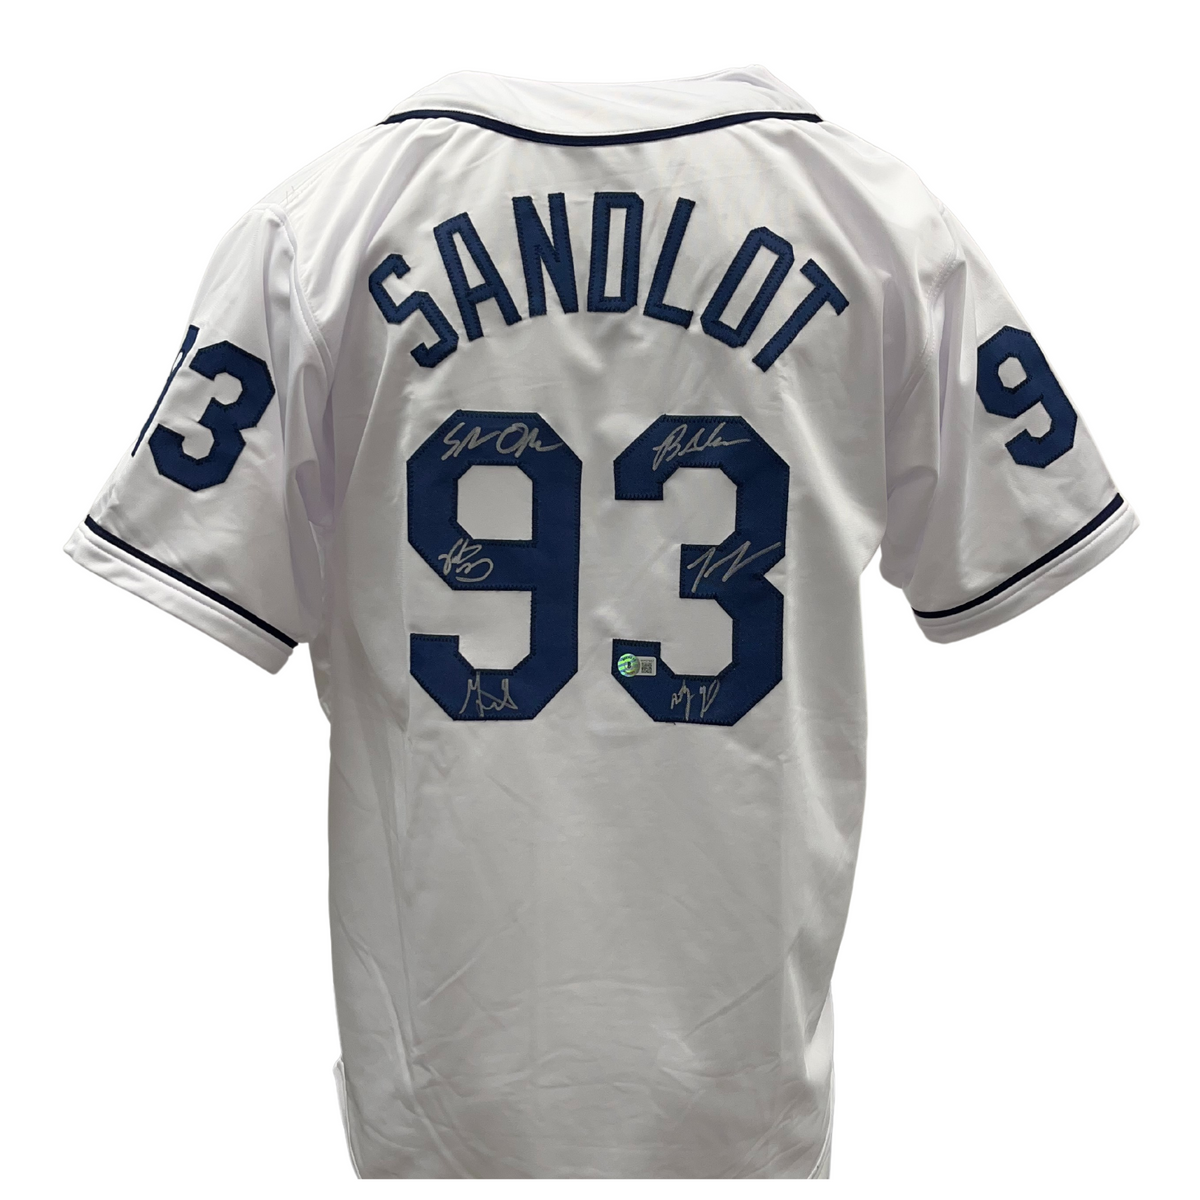 The Sandlot Cast Autographed Custom #93 Jersey with Patrick